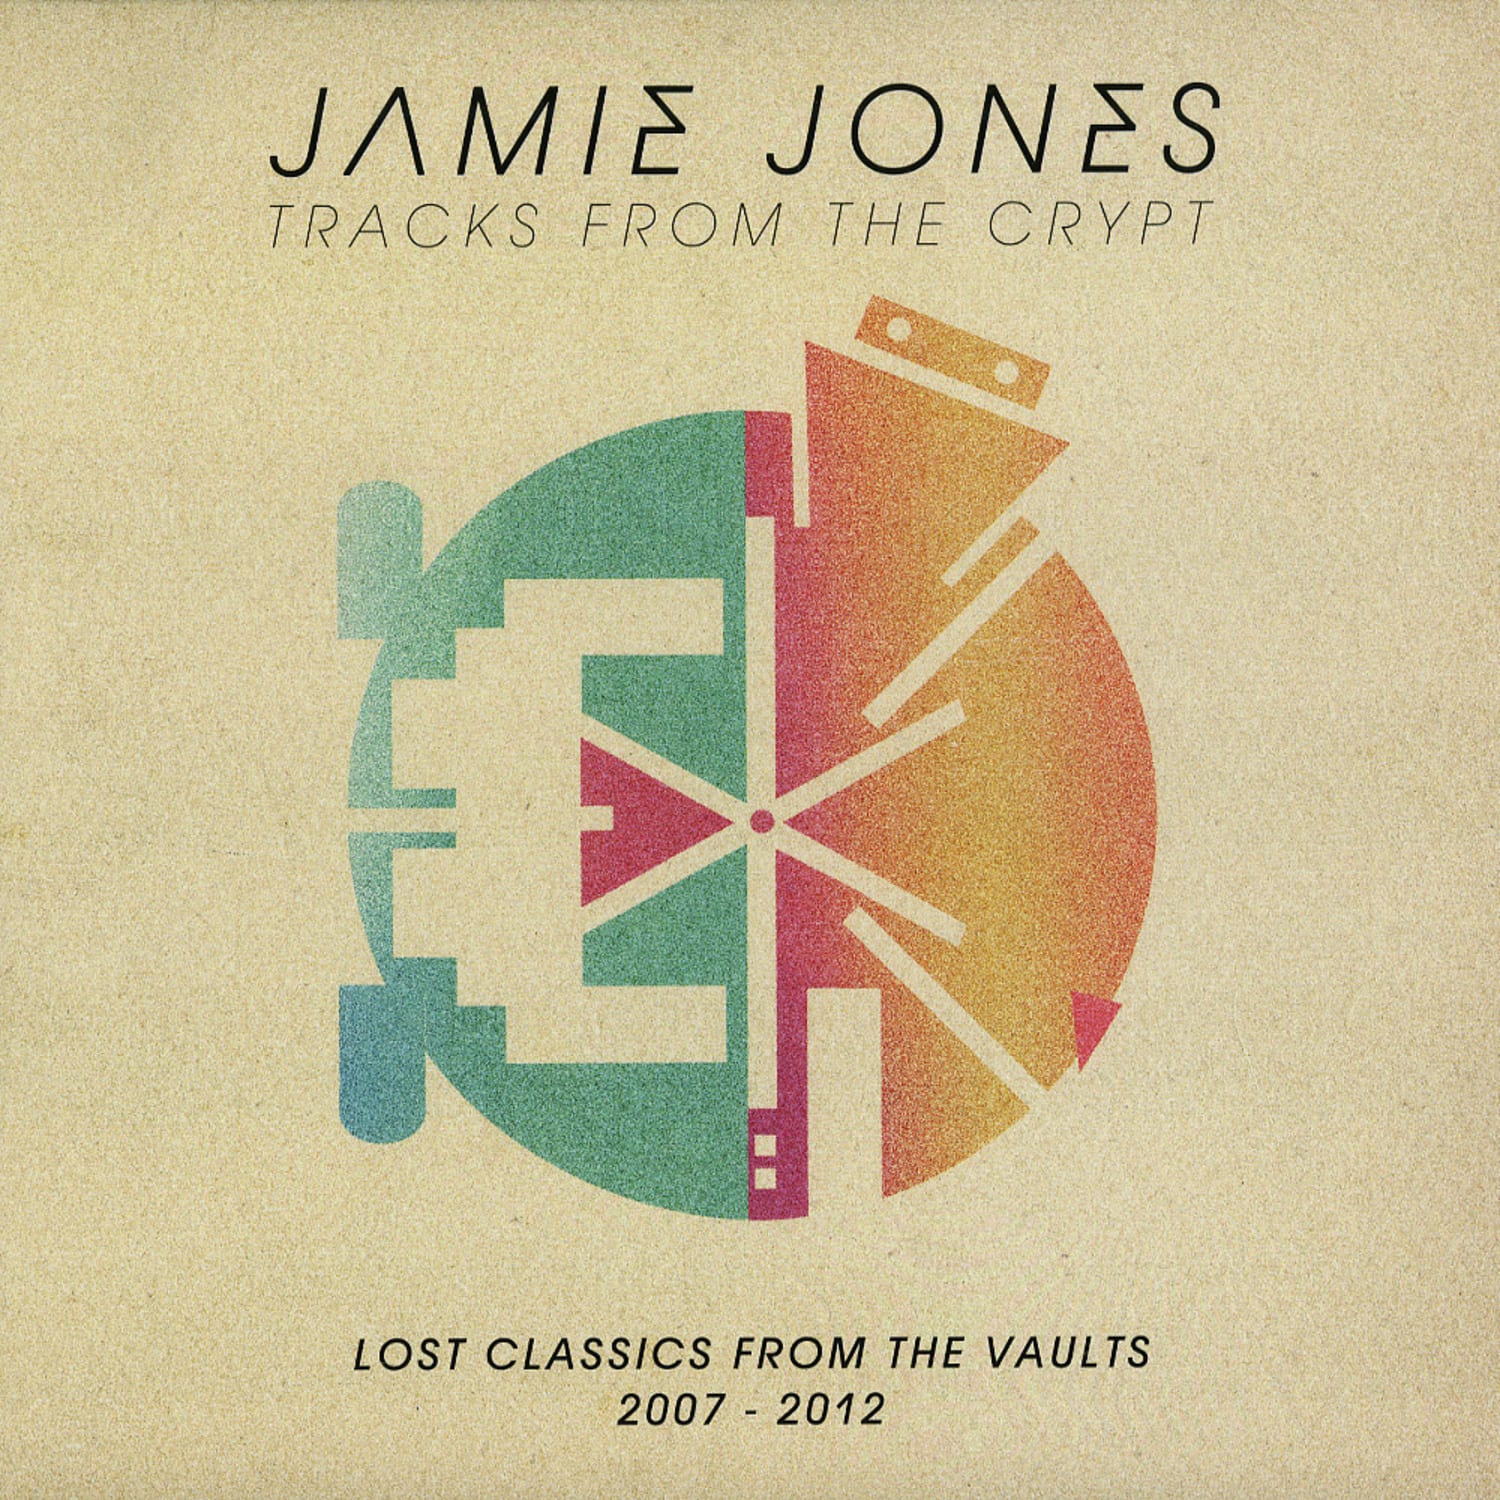 Jamie Jones - TRACKS FROM THE CRYPT 